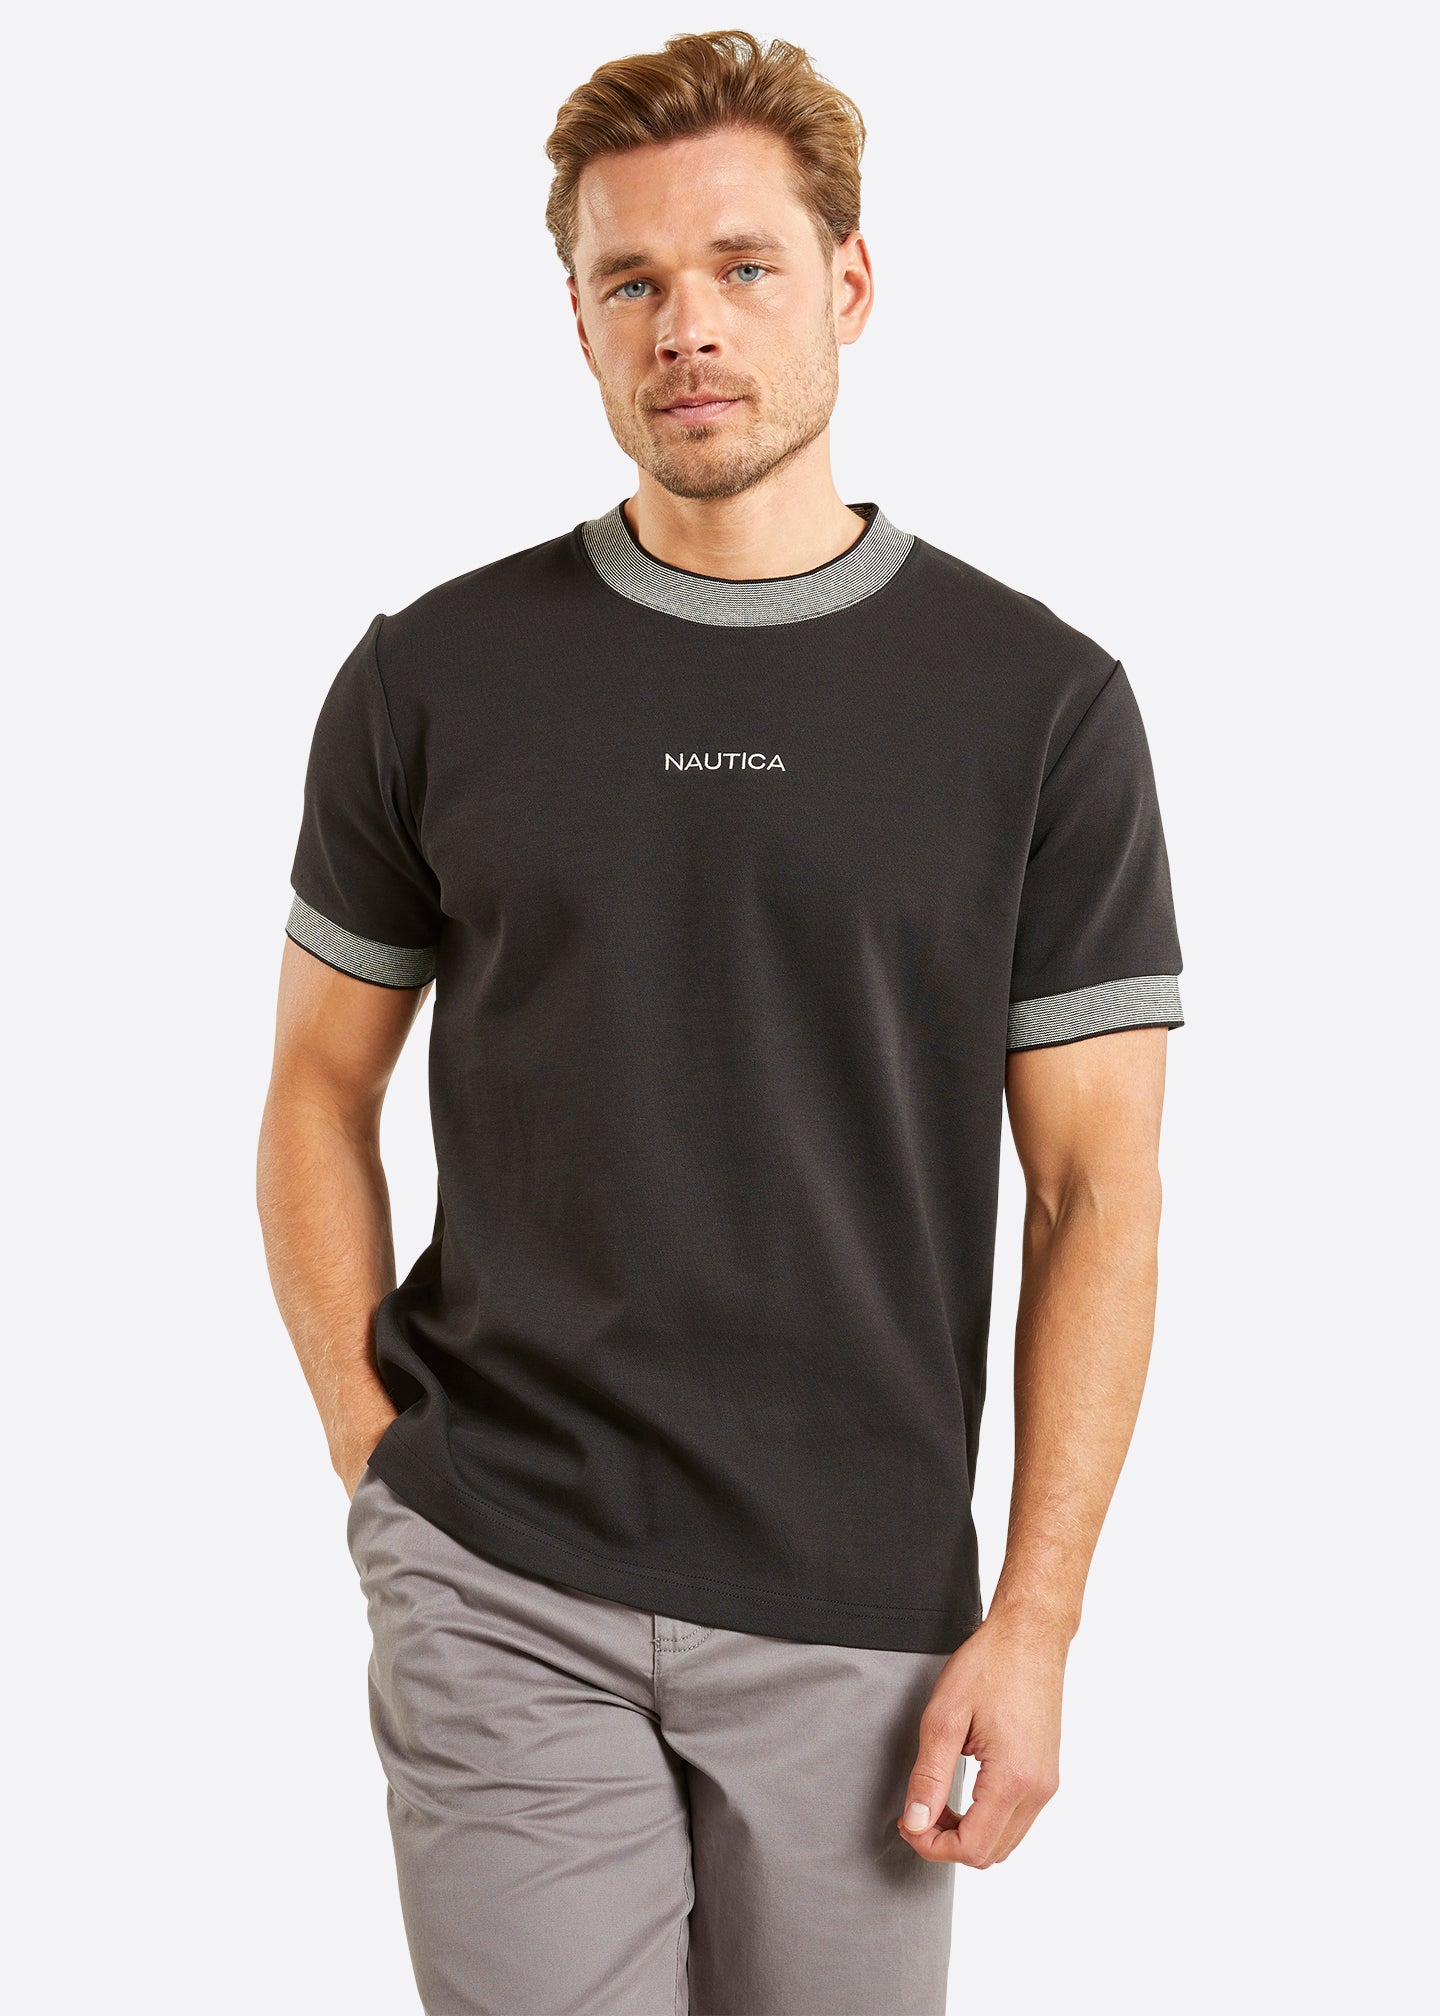 Nautica Cannon T-Shirt - Black - Front